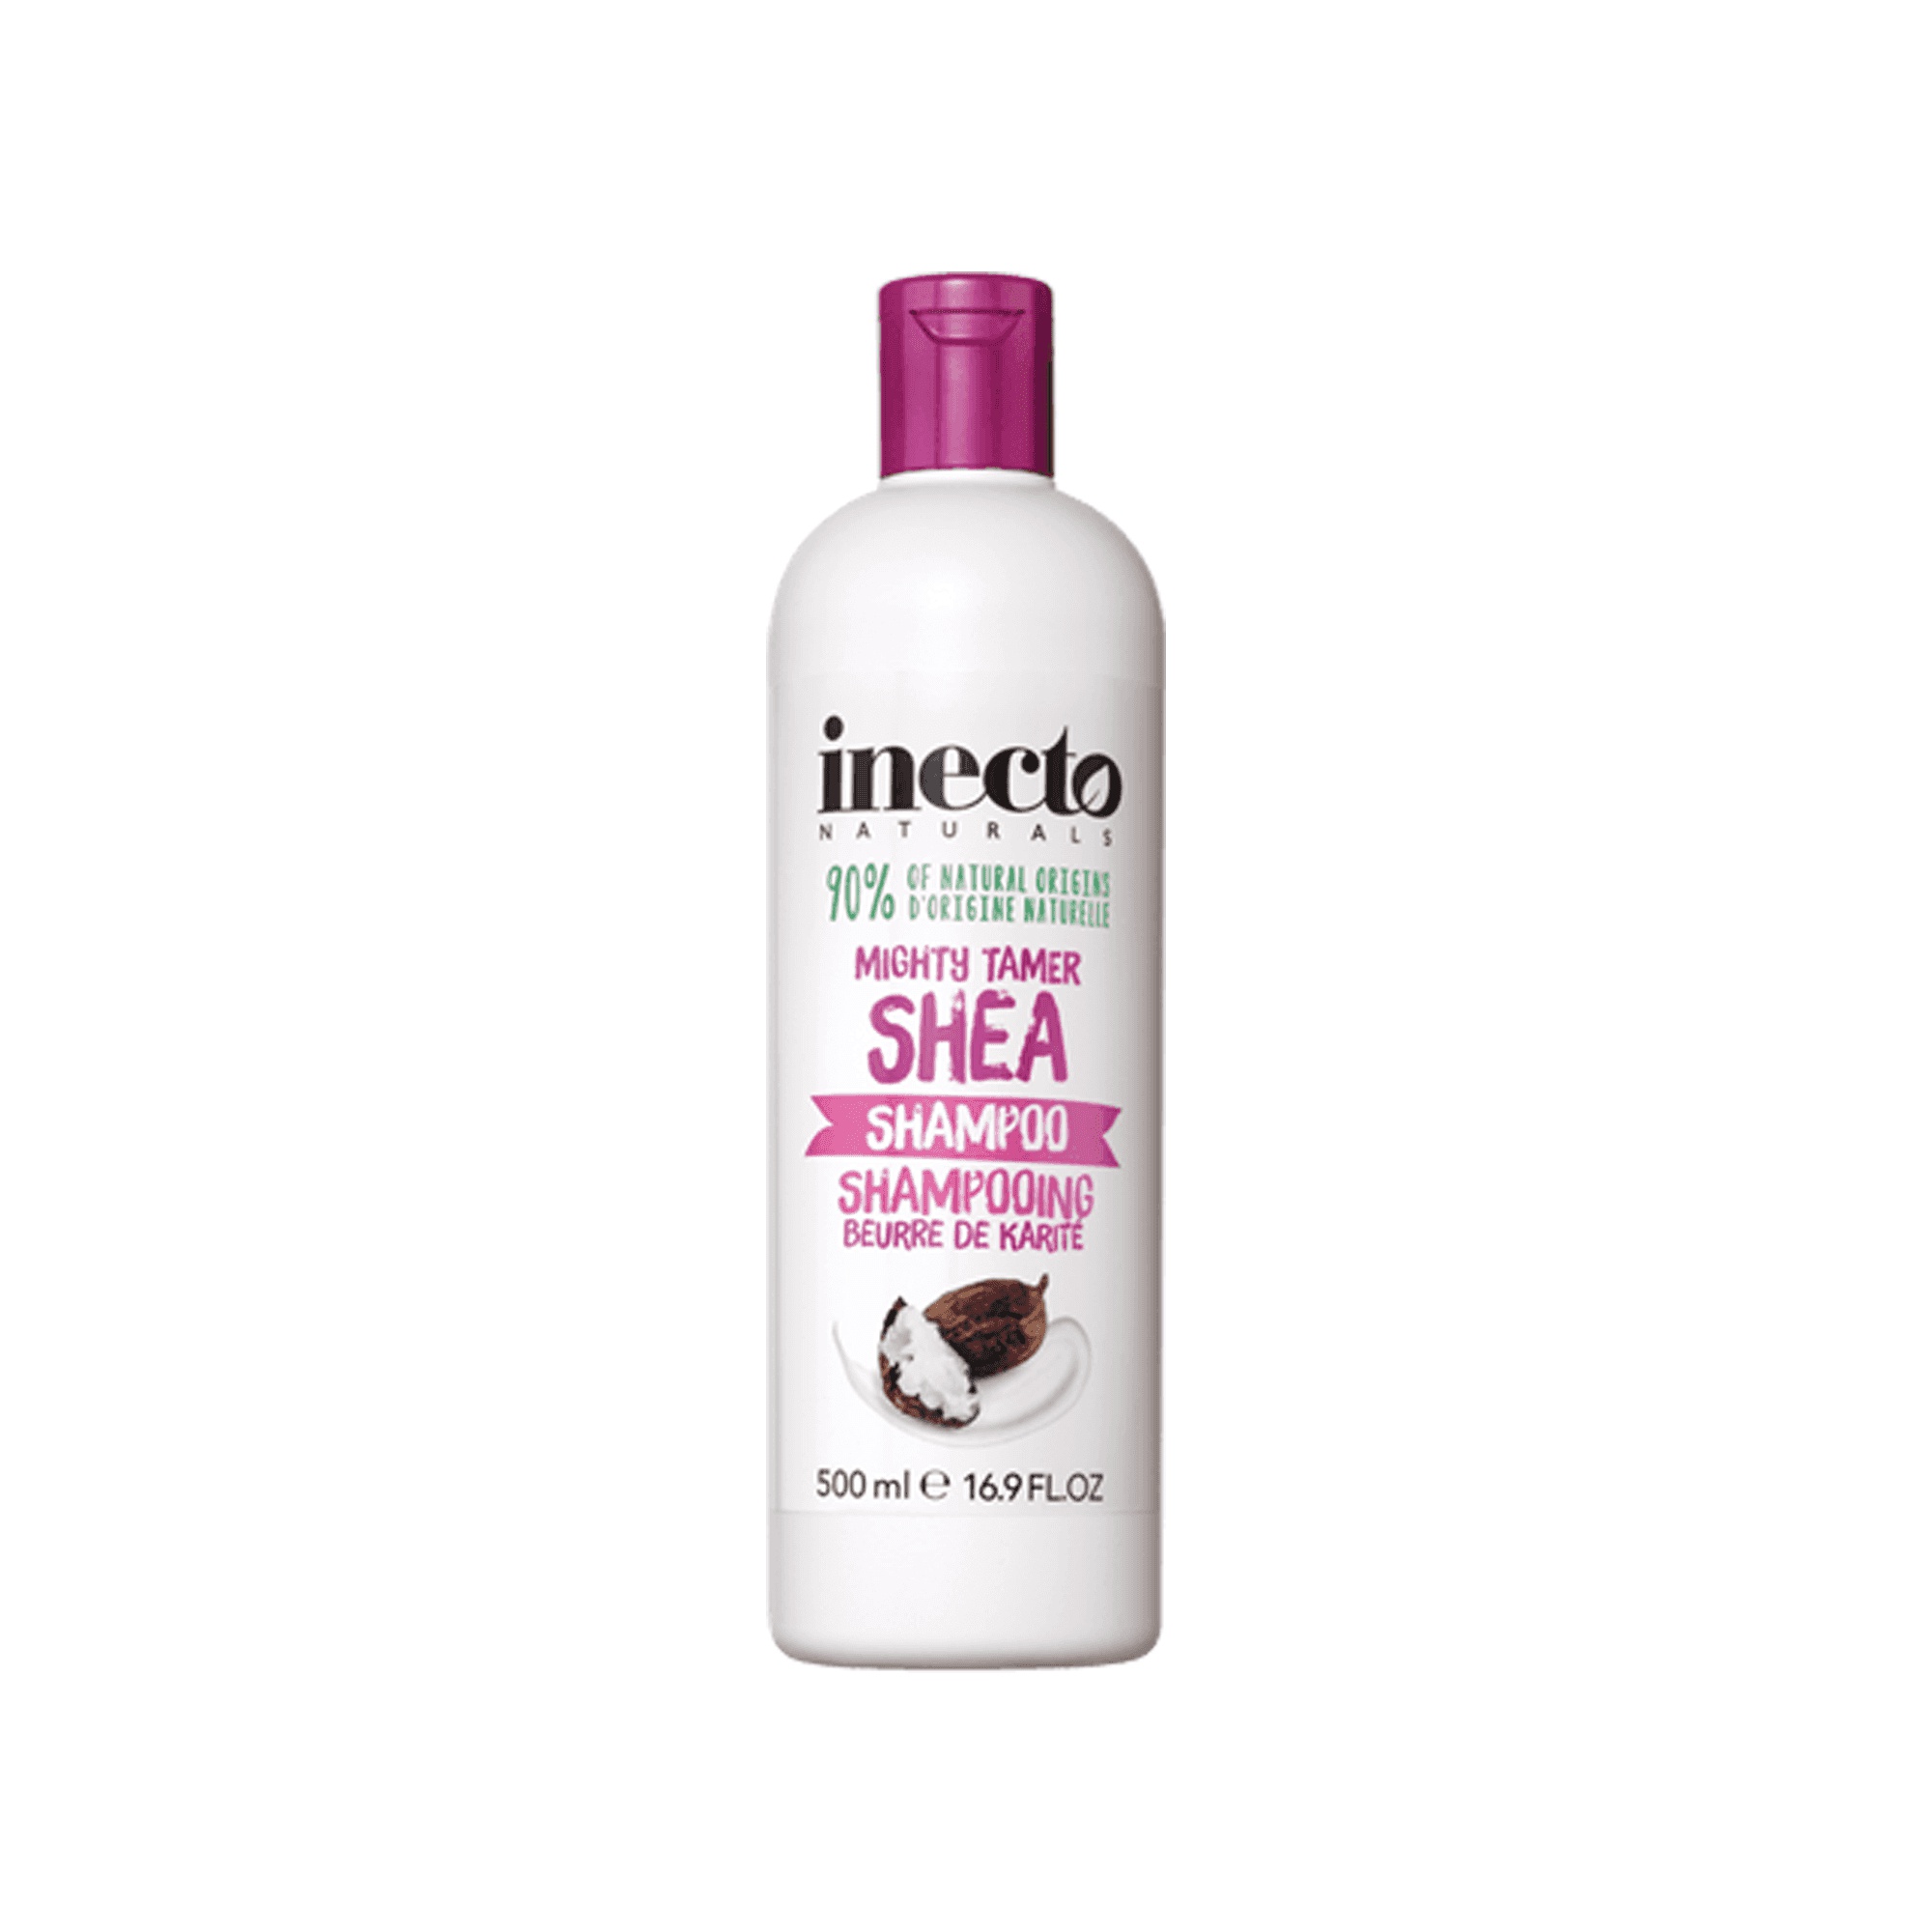 Inecto Hair Shampoo Shea Smoothing Operator 500Ml - INECTO - Hair Care - in Sri Lanka